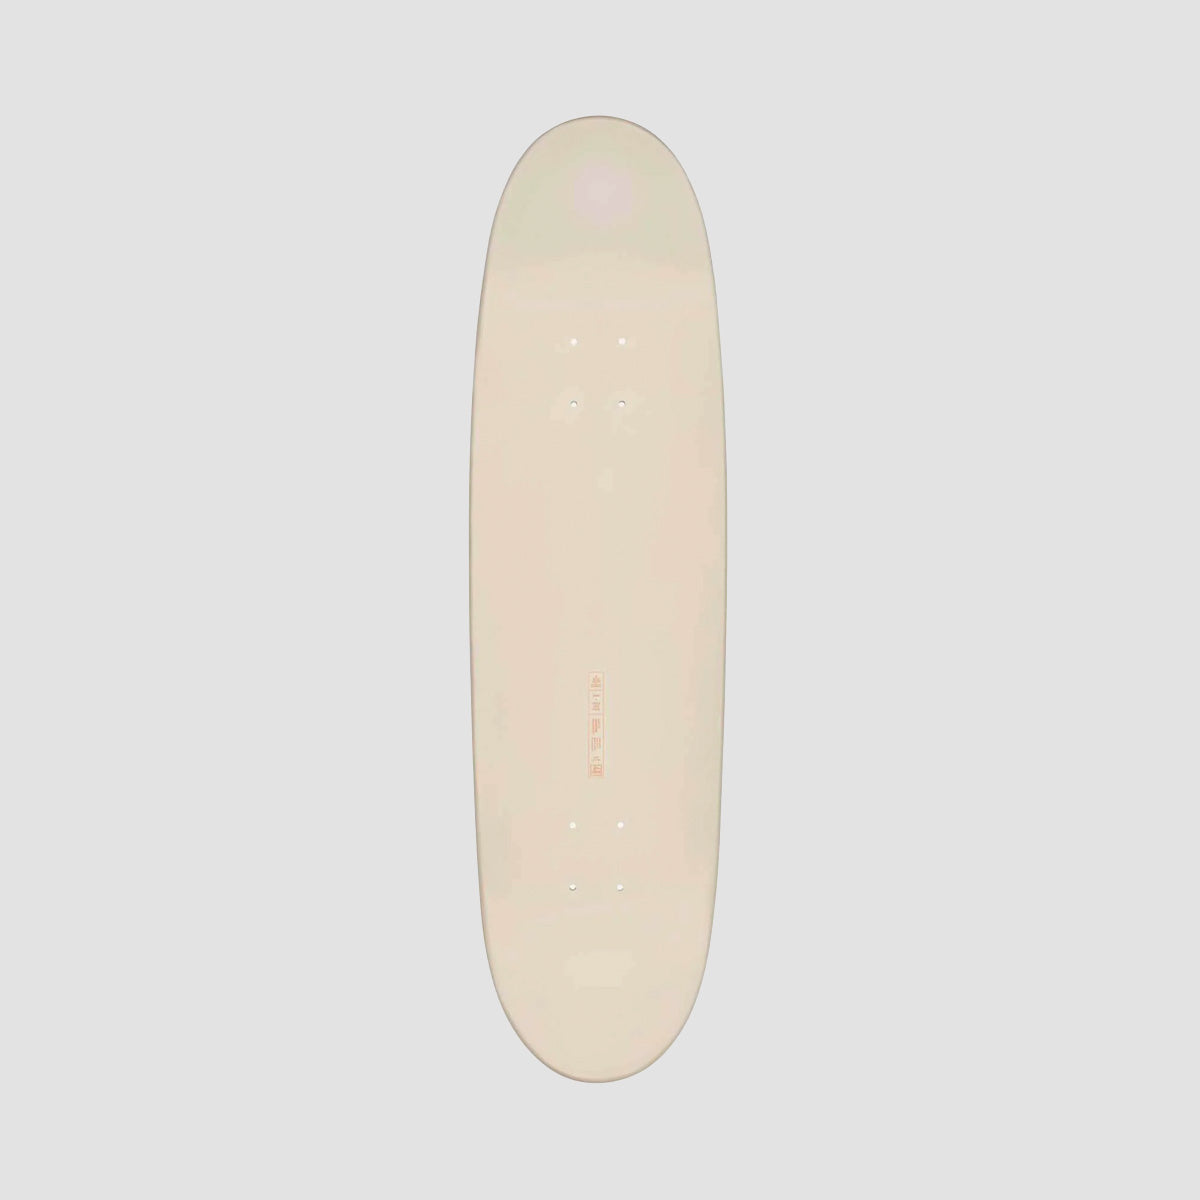 Globe Eggy Skateboard Deck Off-White/The Lot - 8.625"